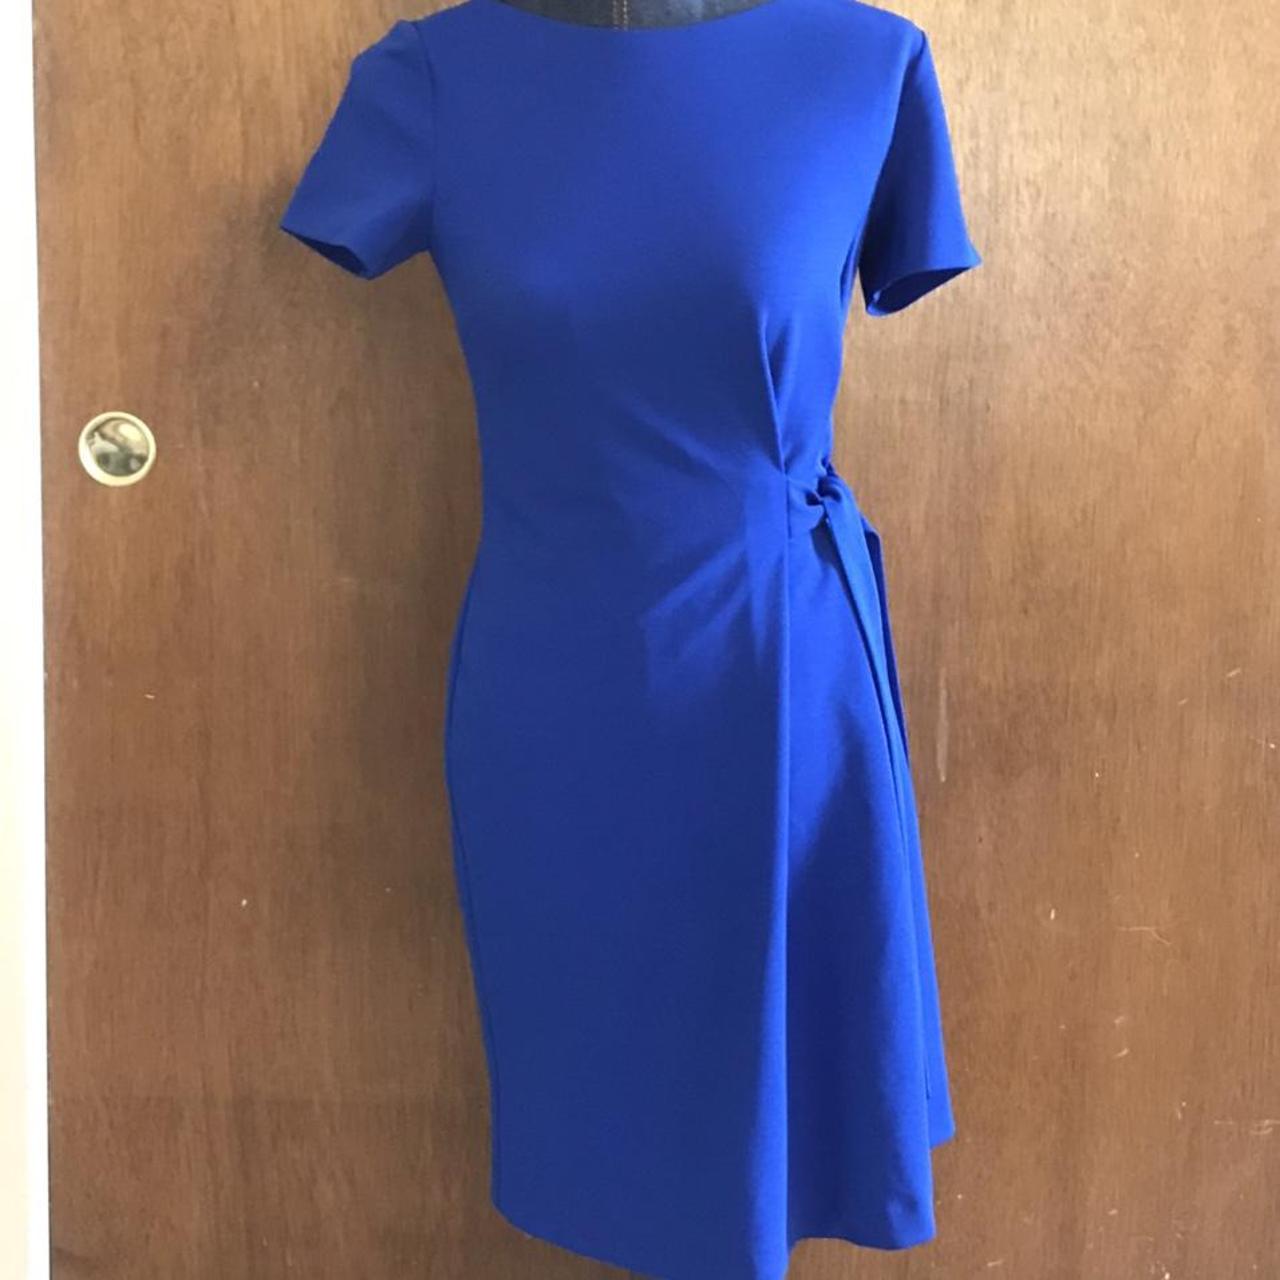 Debenhams Women's Blue Dress